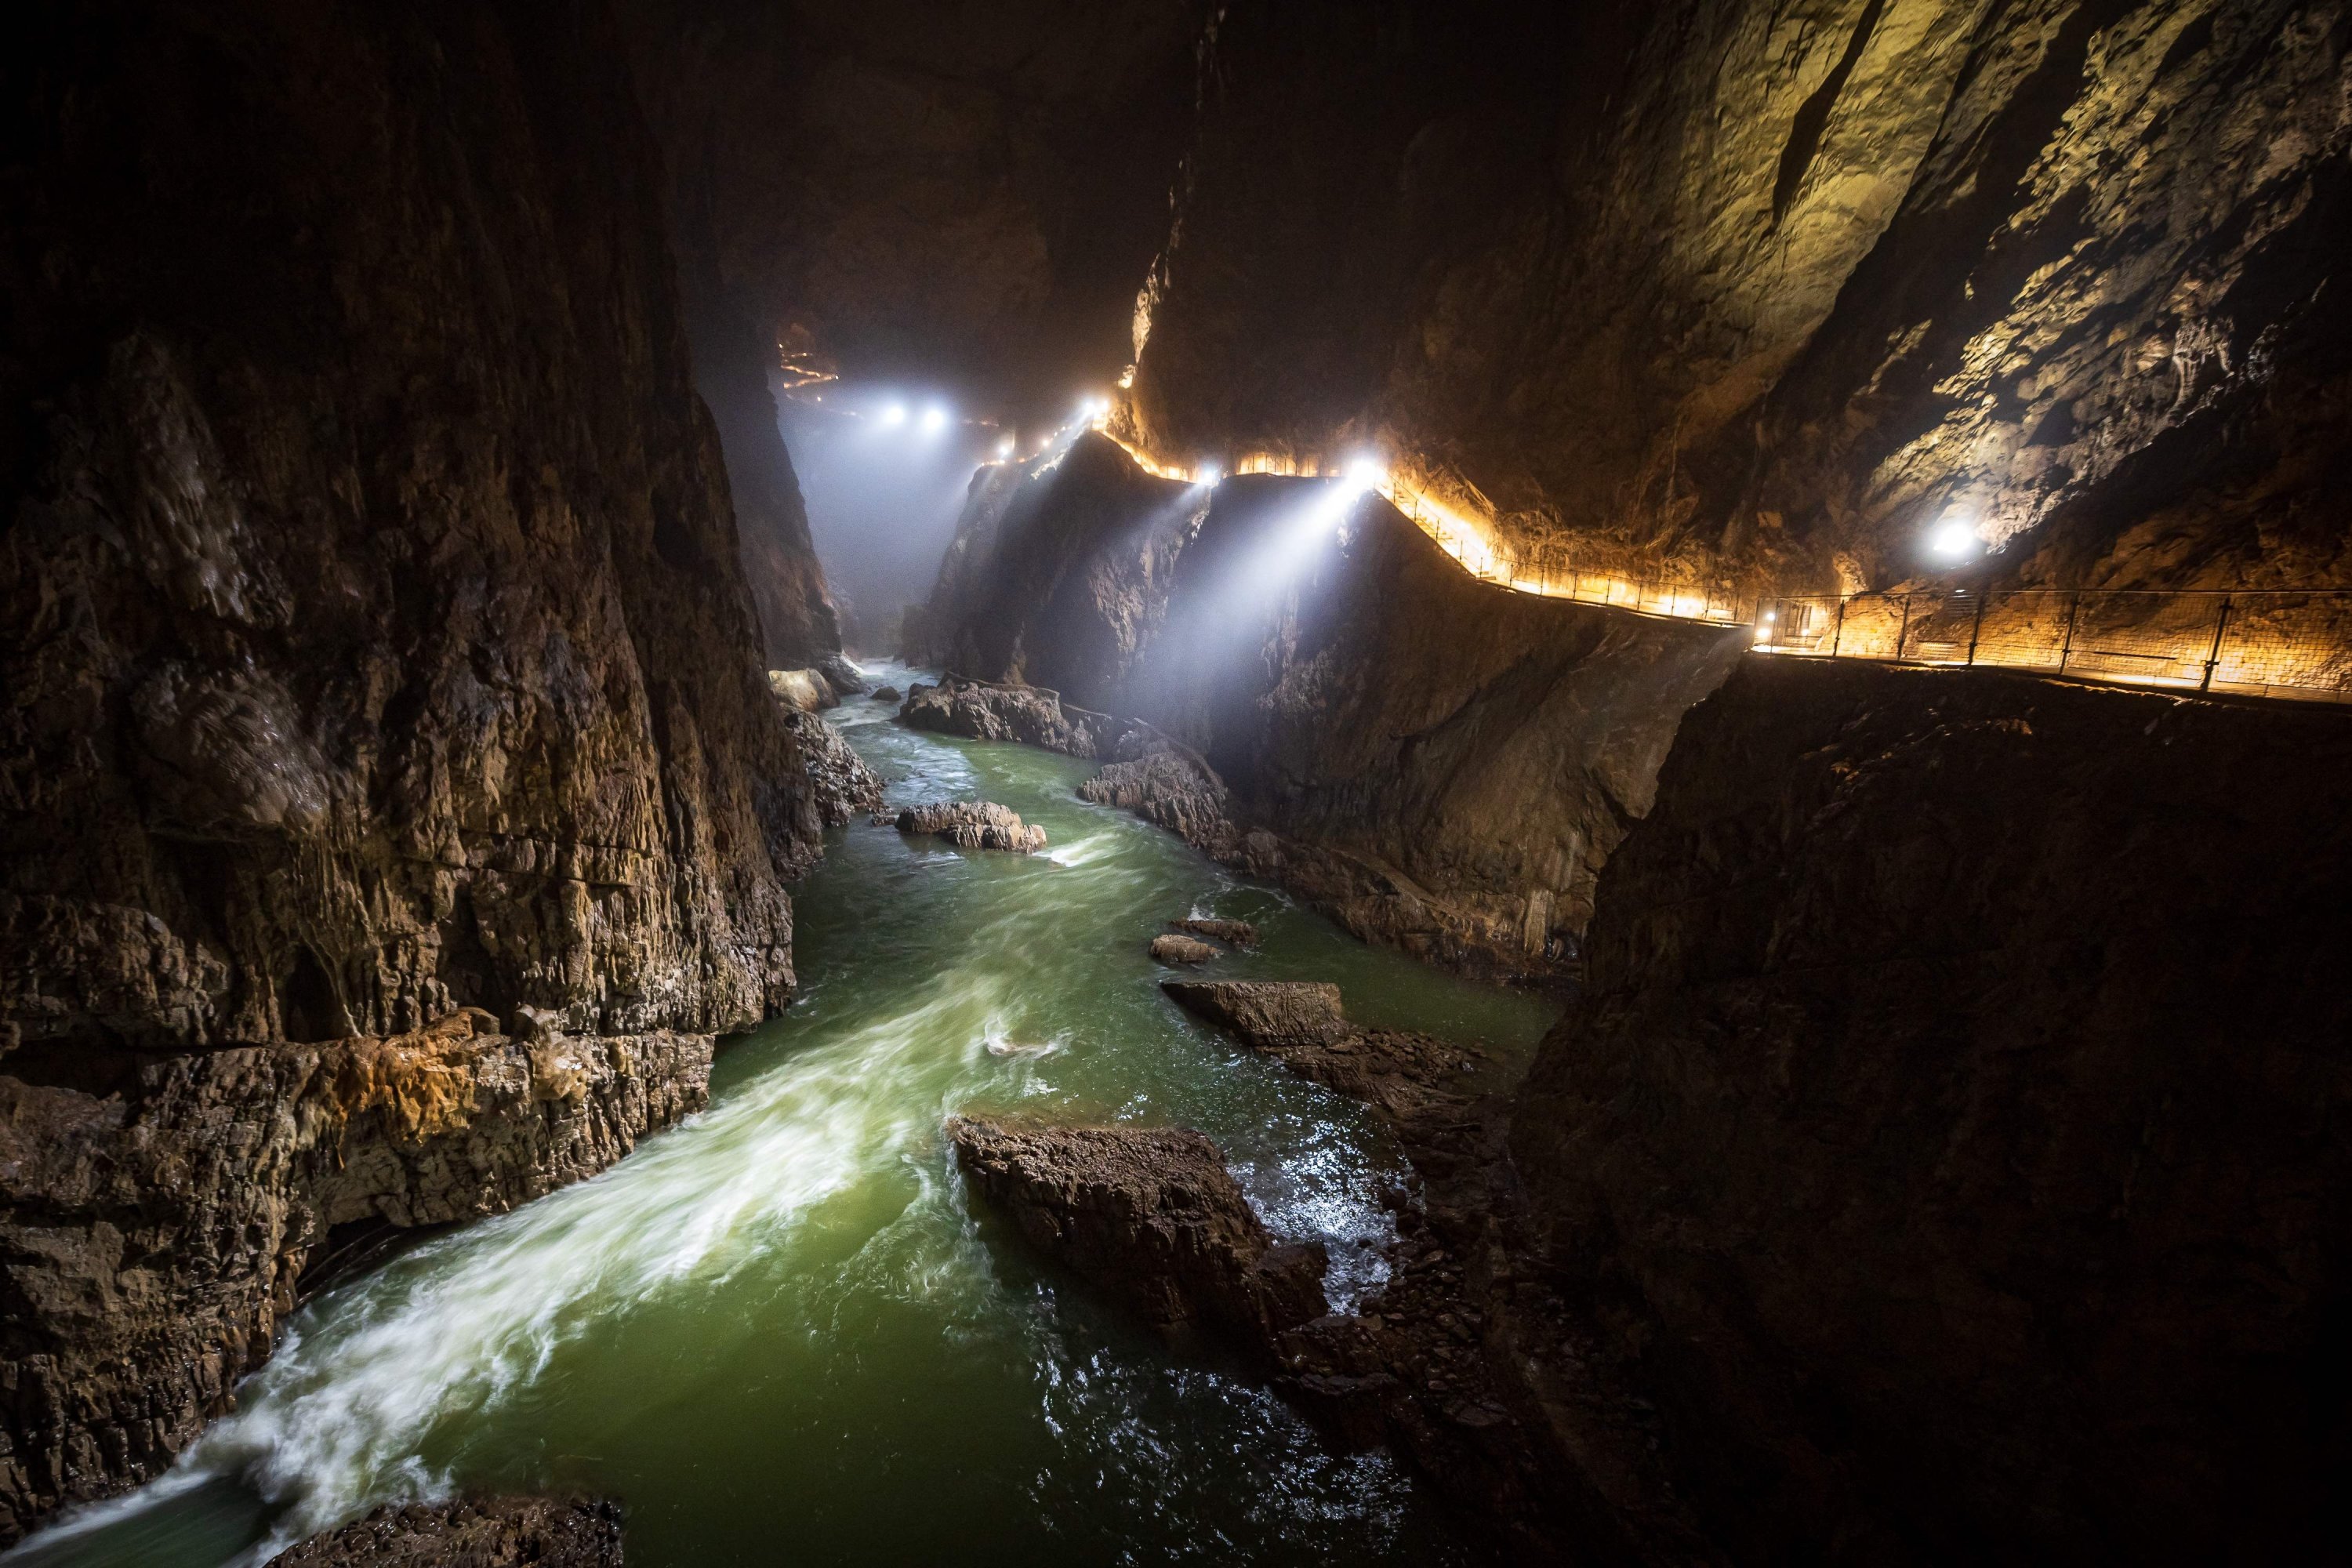 The Reka River flows through the Skocjan Caves near the town of Divaca, Slovenia, May 25, 2021. (AFP Photo)